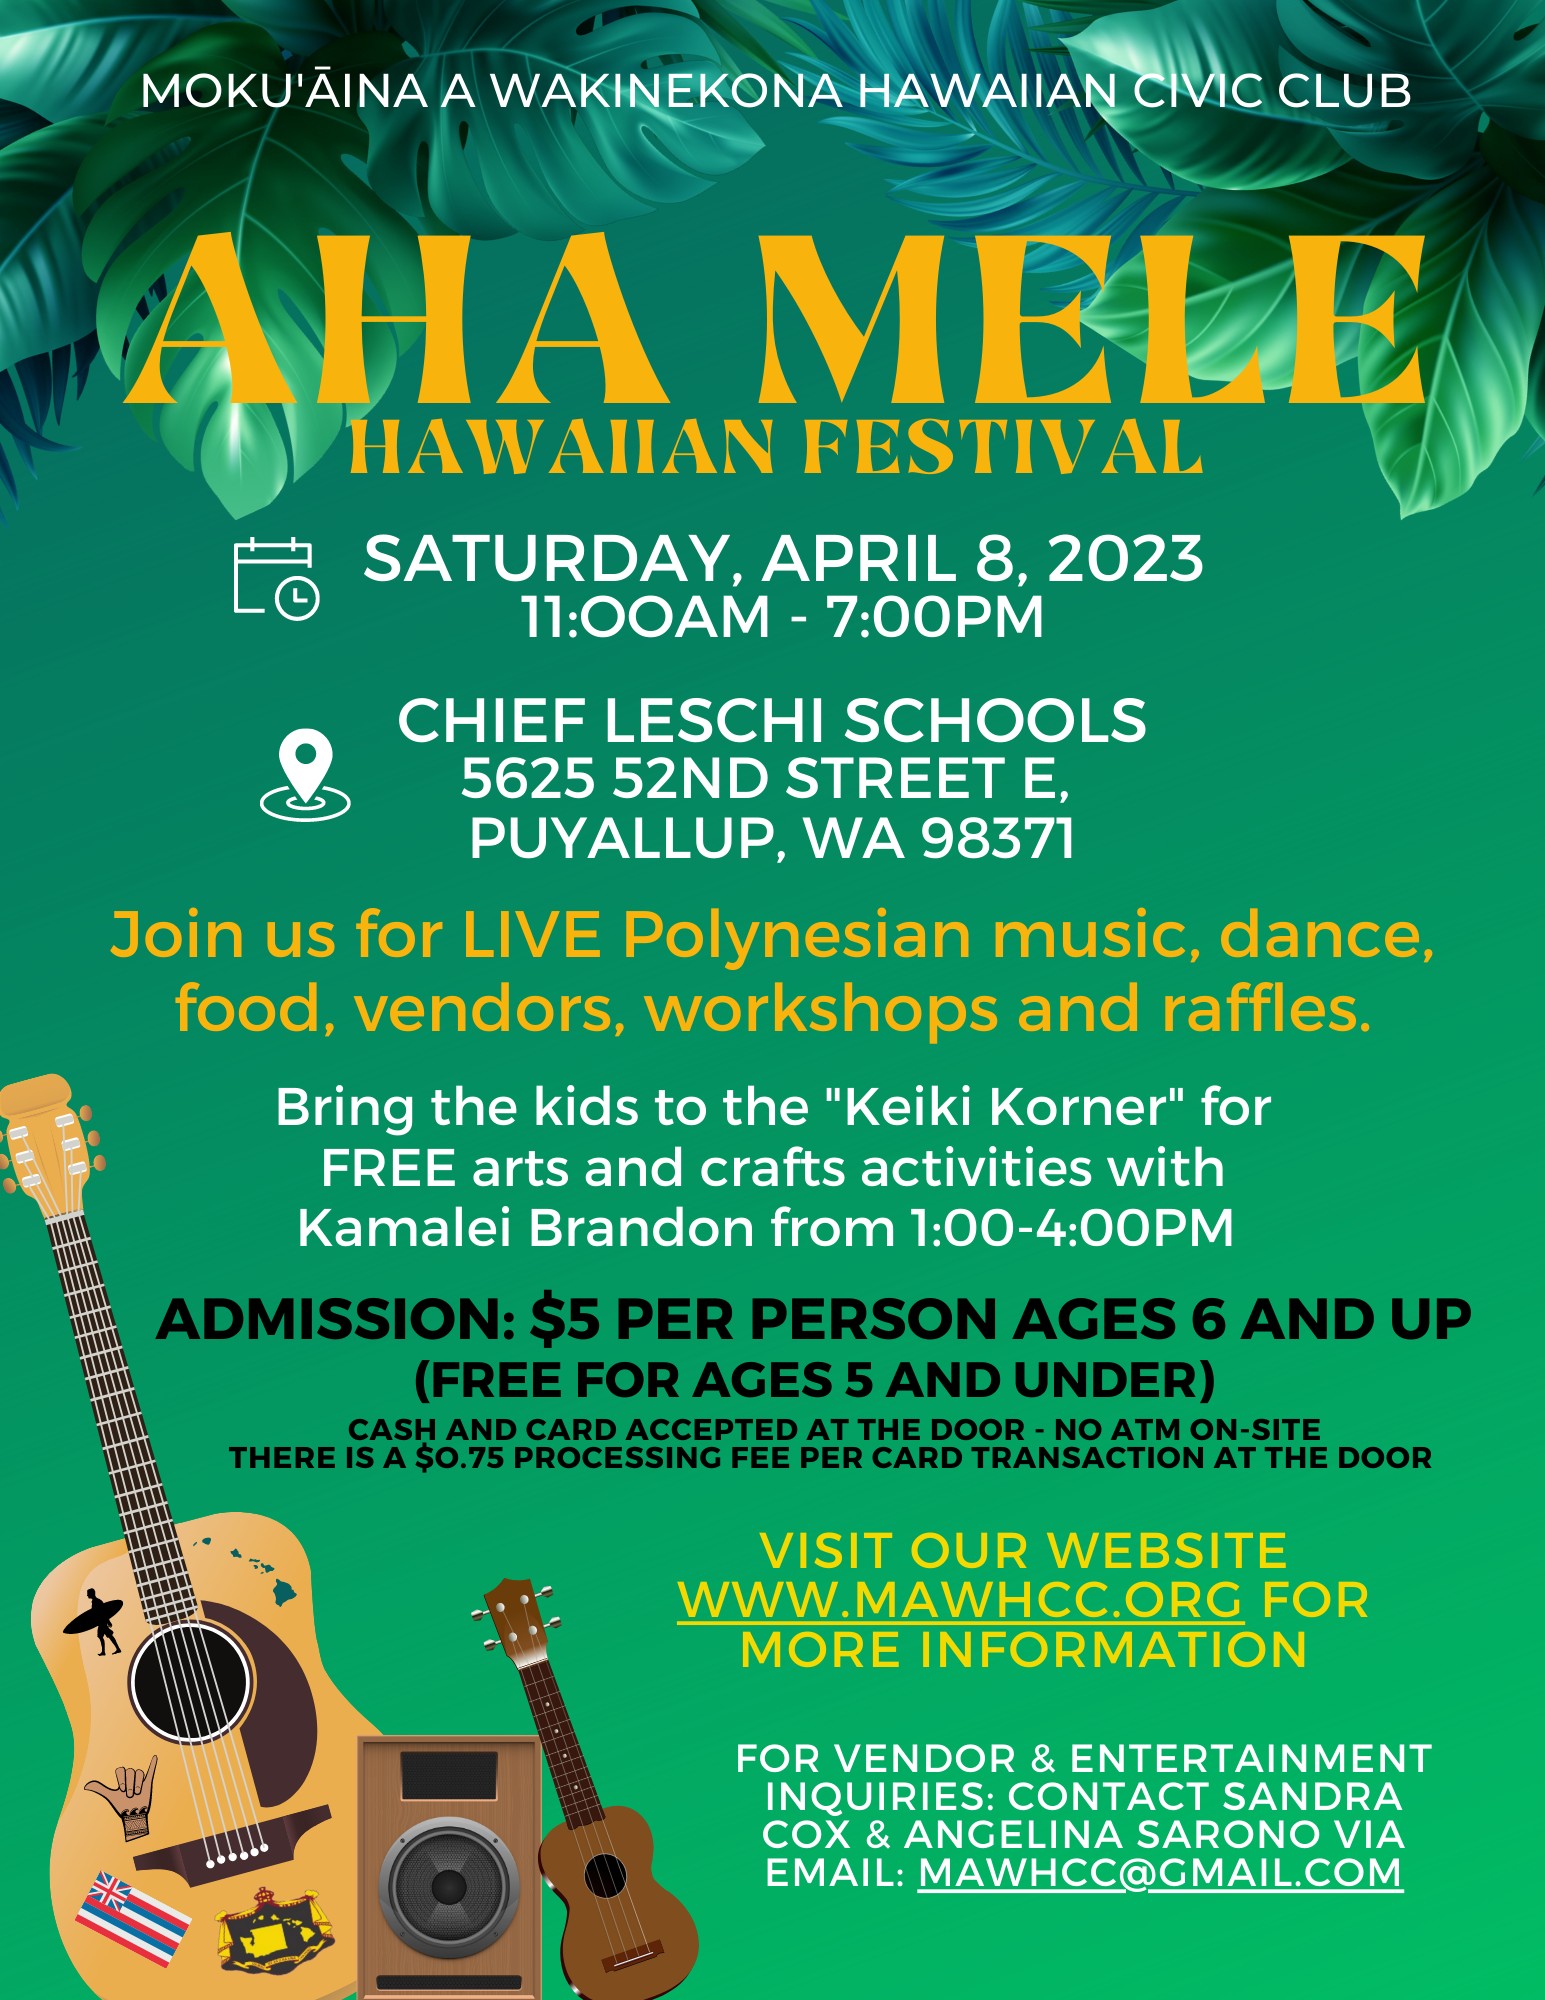 2023 Aha Mele Hawaiian Festival echoX